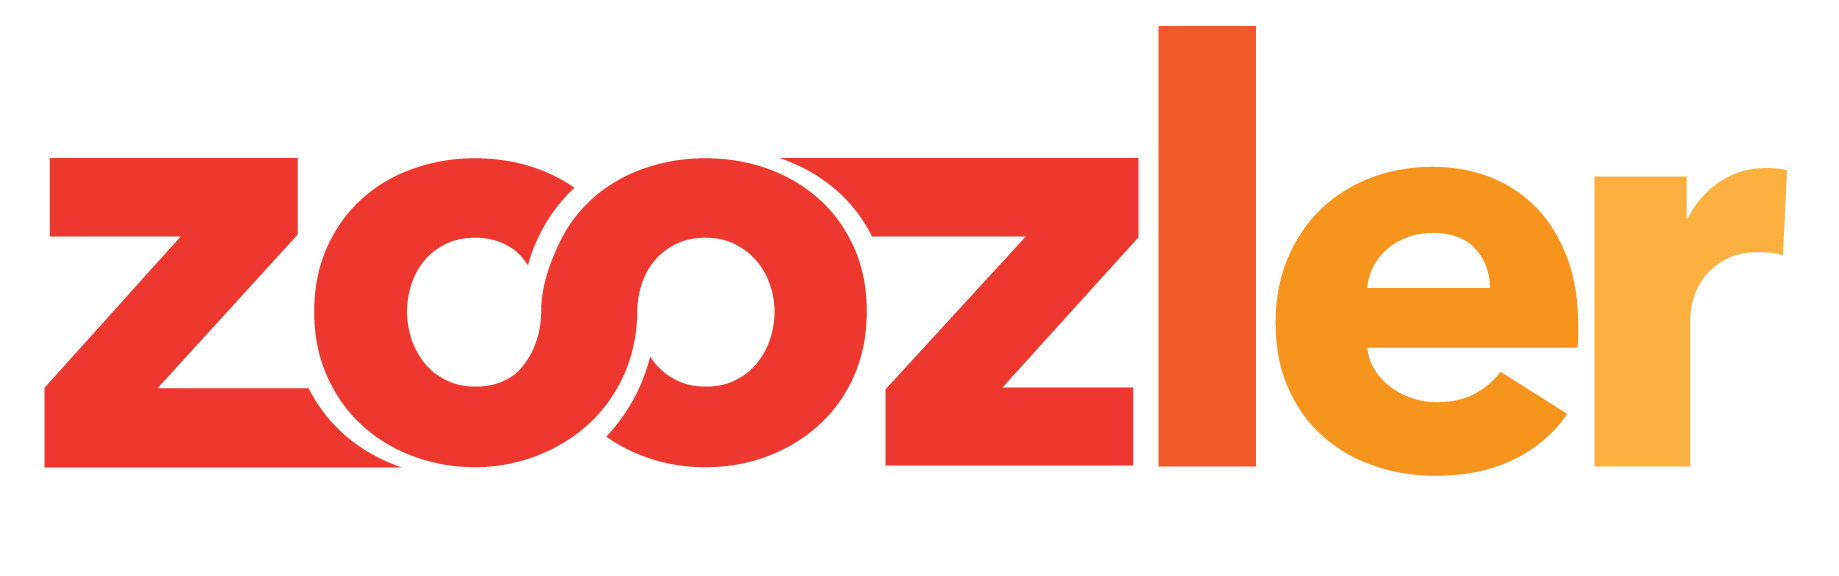 Zoozler Logo